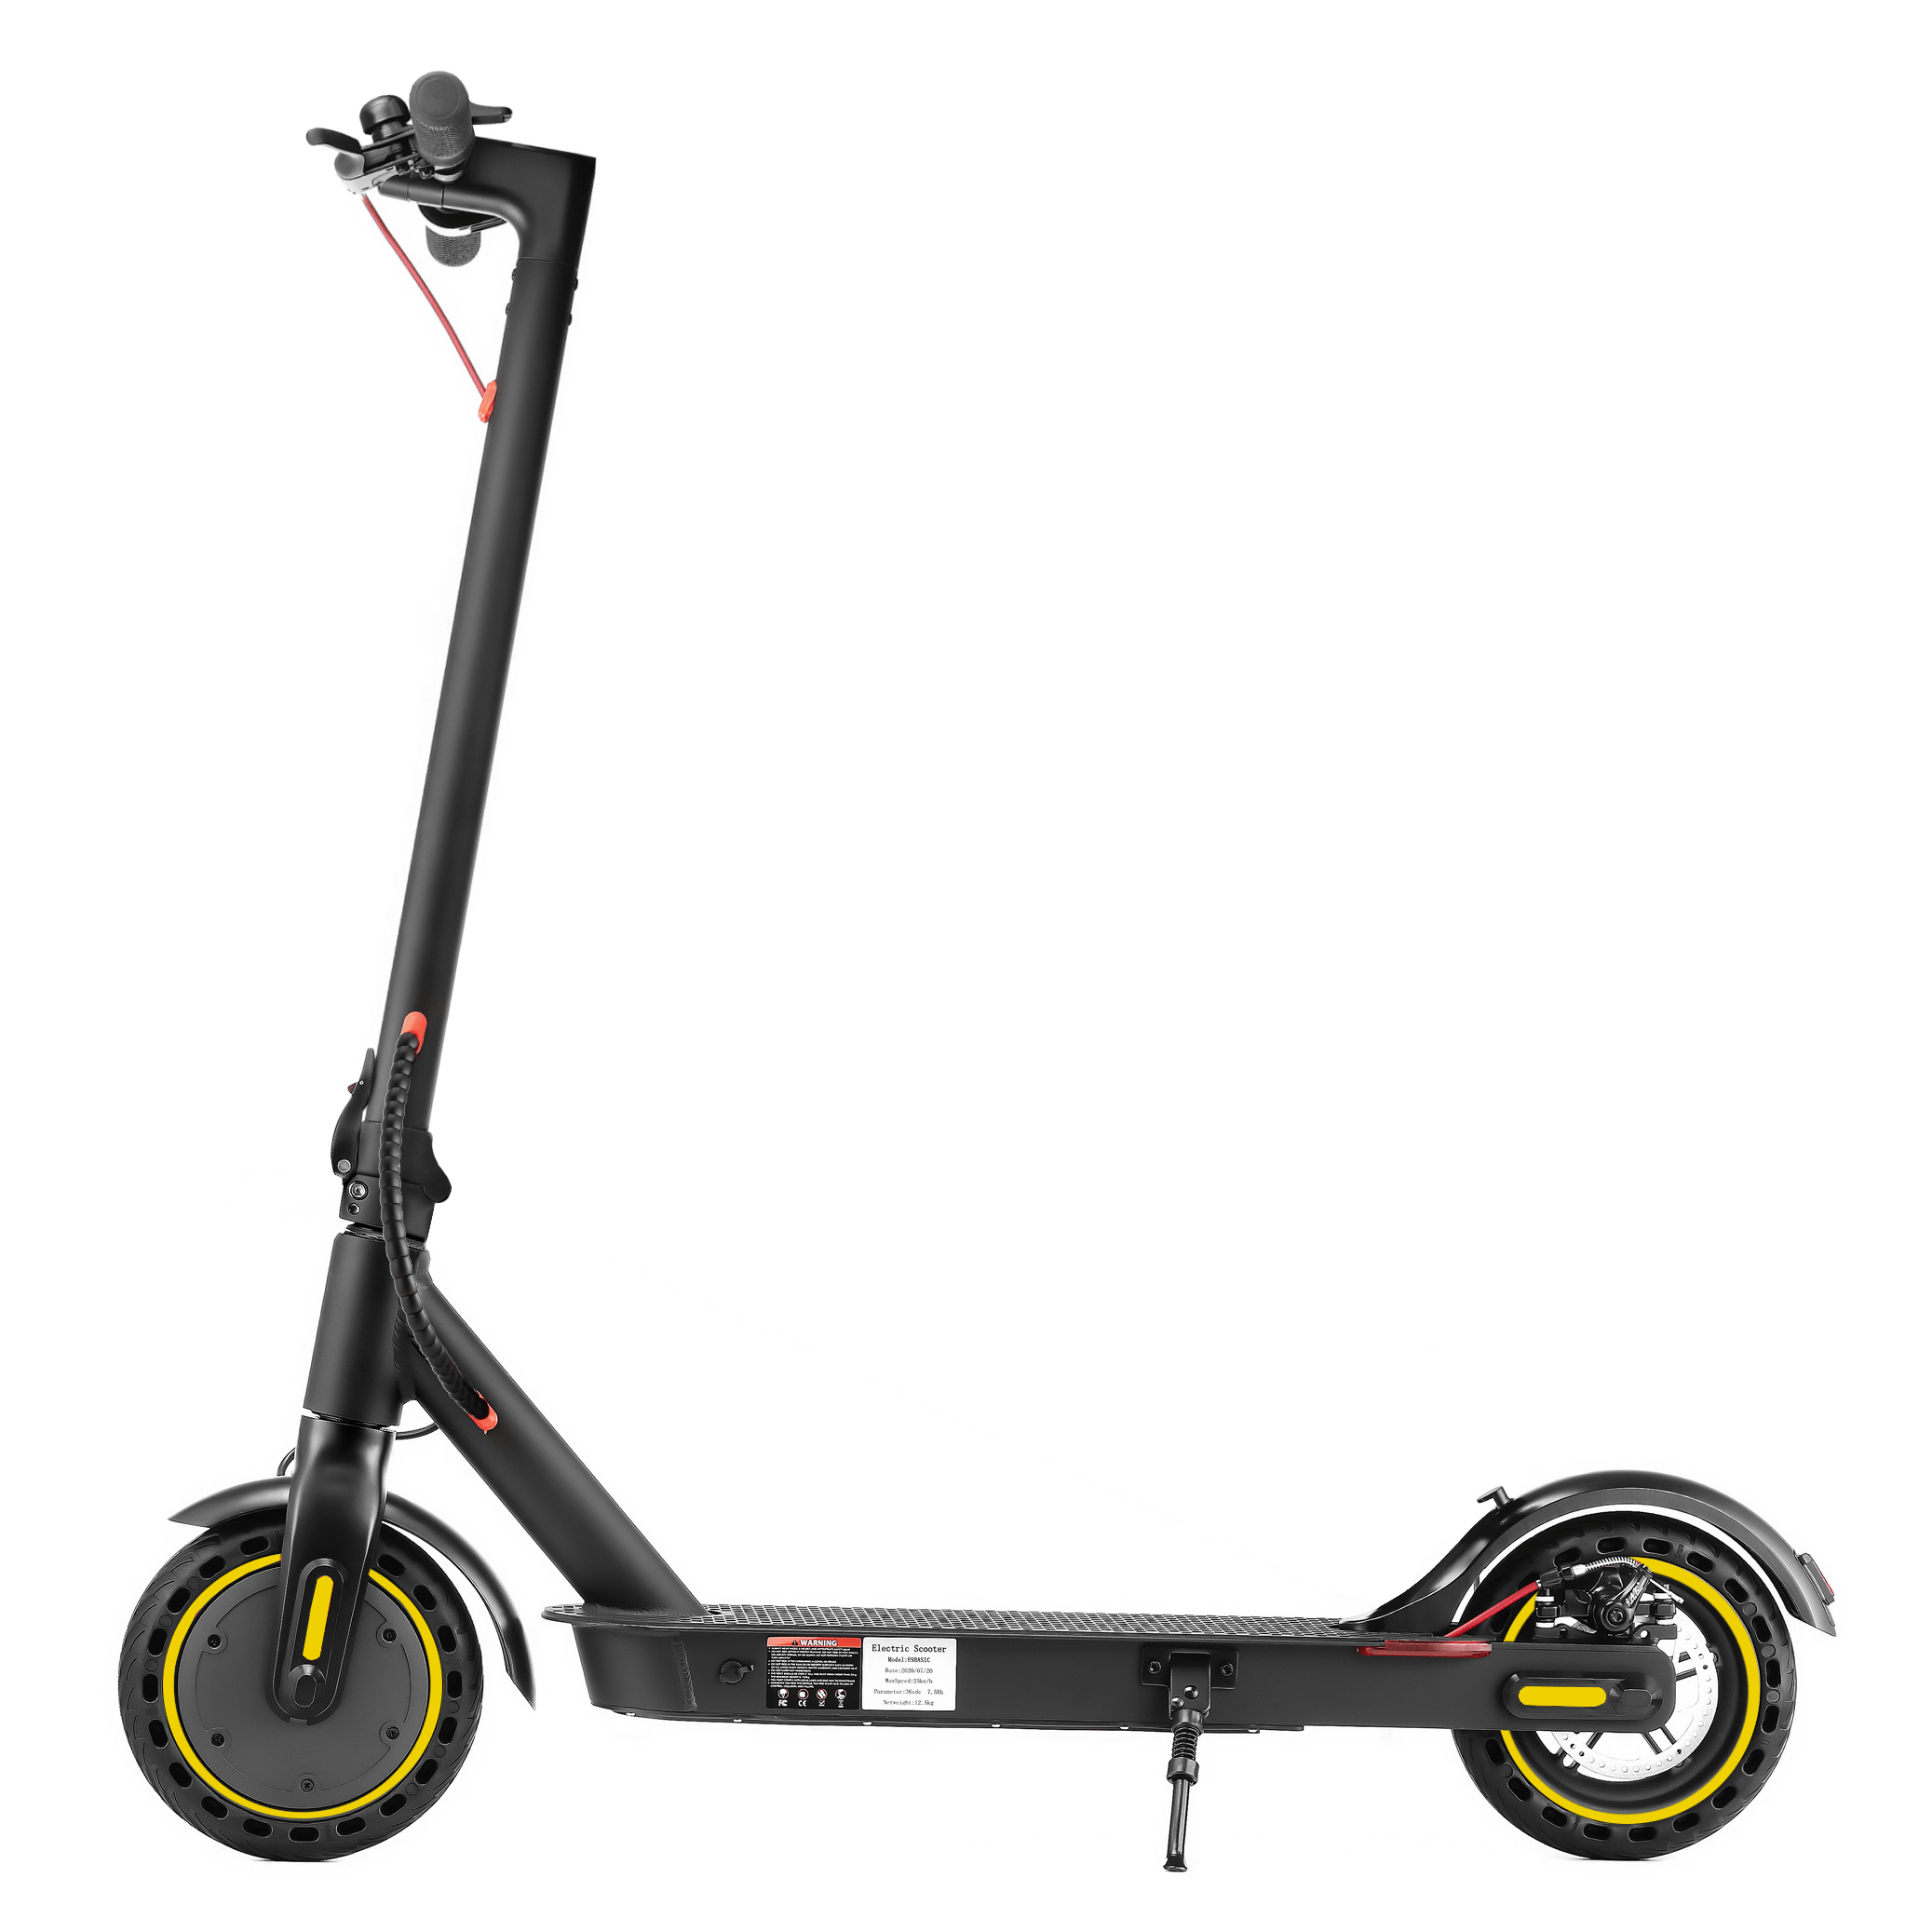 Vapaa E9PRO - Portable Electric Scooter with Smart App – IMGadgets